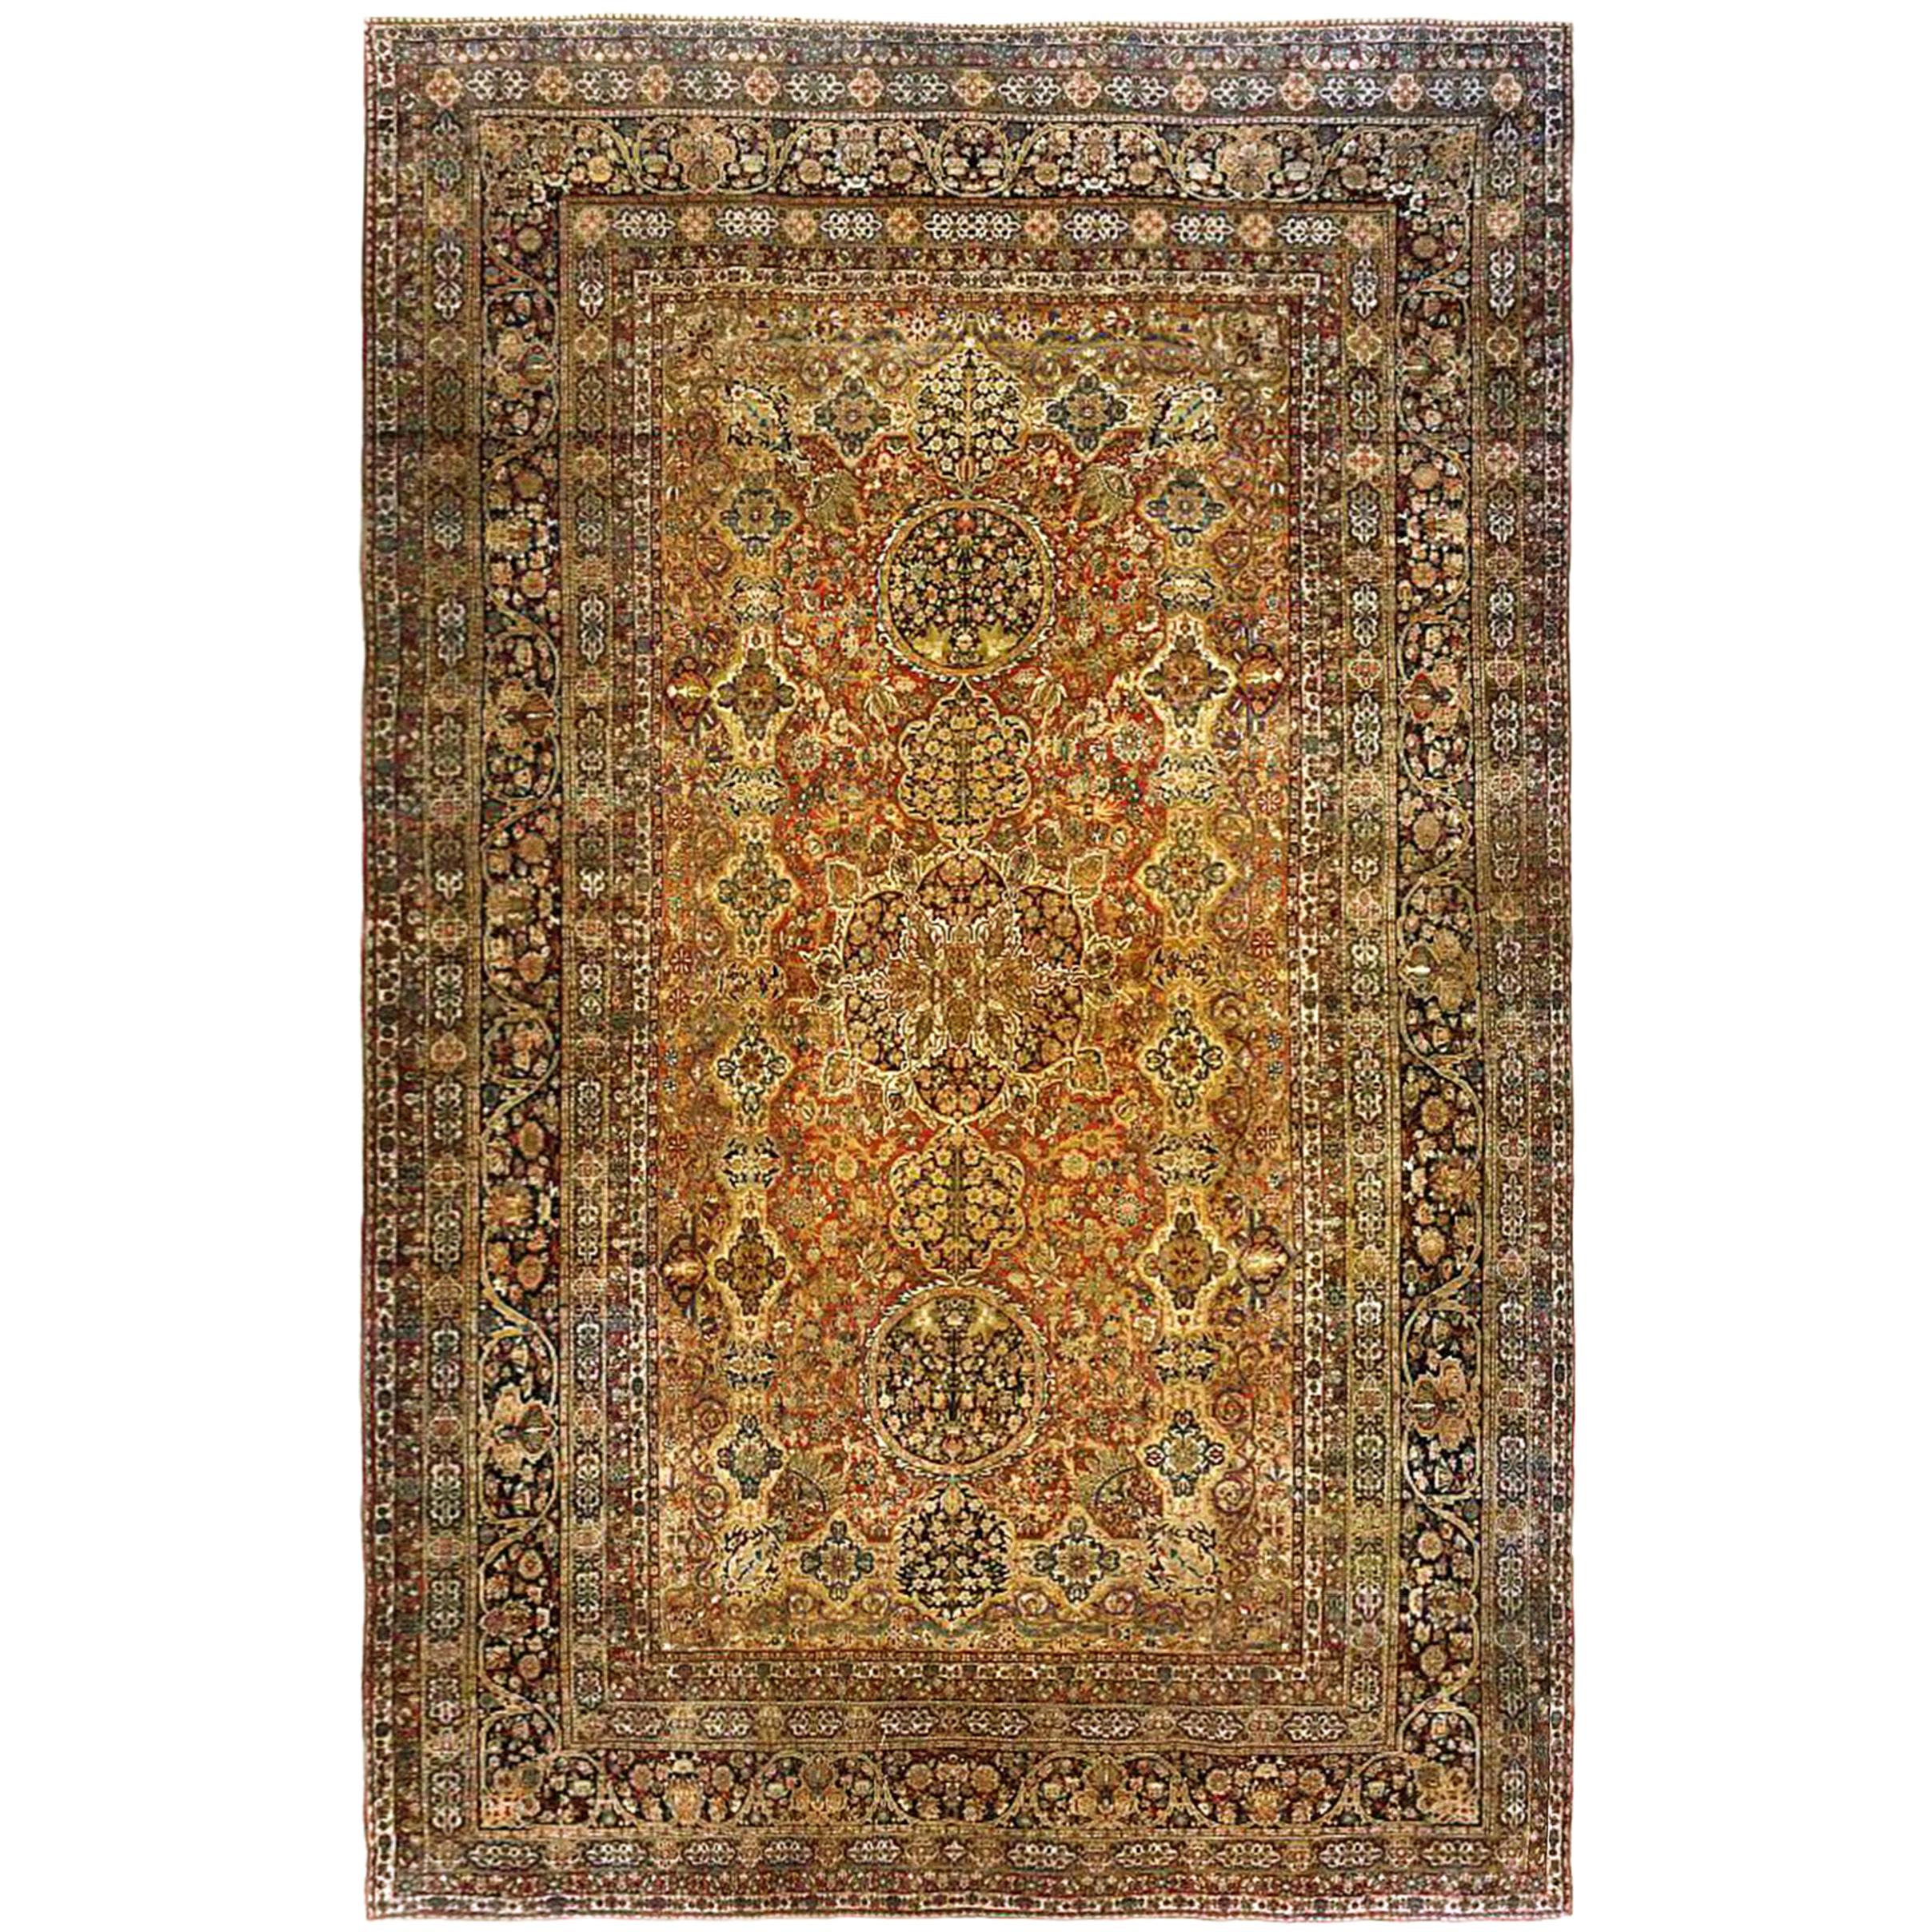 Antique Persian Lavar Oriental Carpet, in Mansion Size, with Fine Floral Design